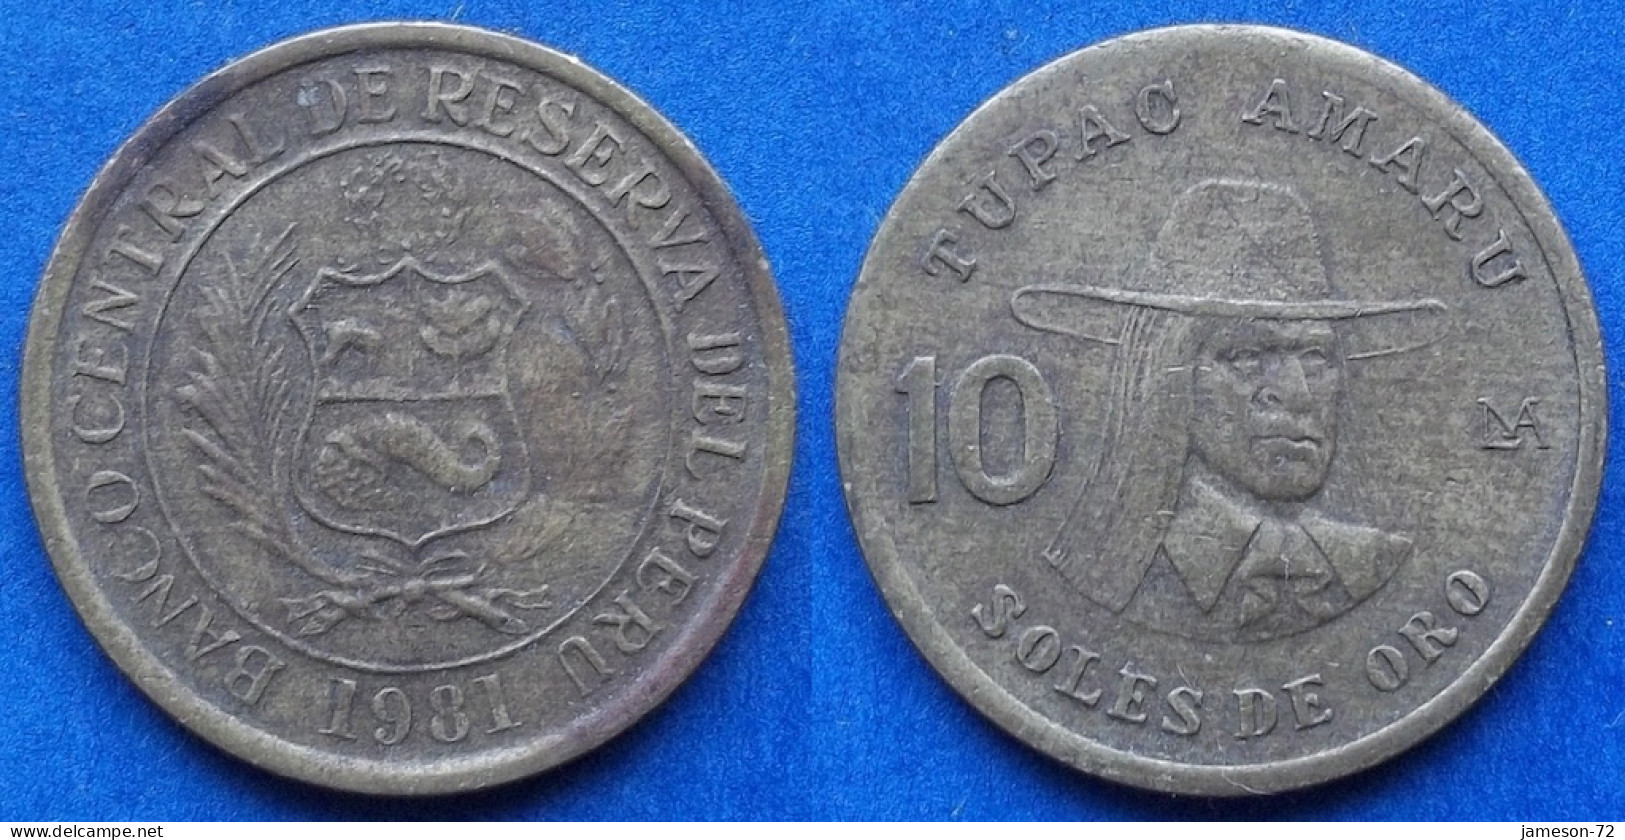 PERU - 10 Soles 1981 "Tupac Amaru" KM# 272.2 Decimal Coinage (1893-1986) - Edelweiss Coins - Perú